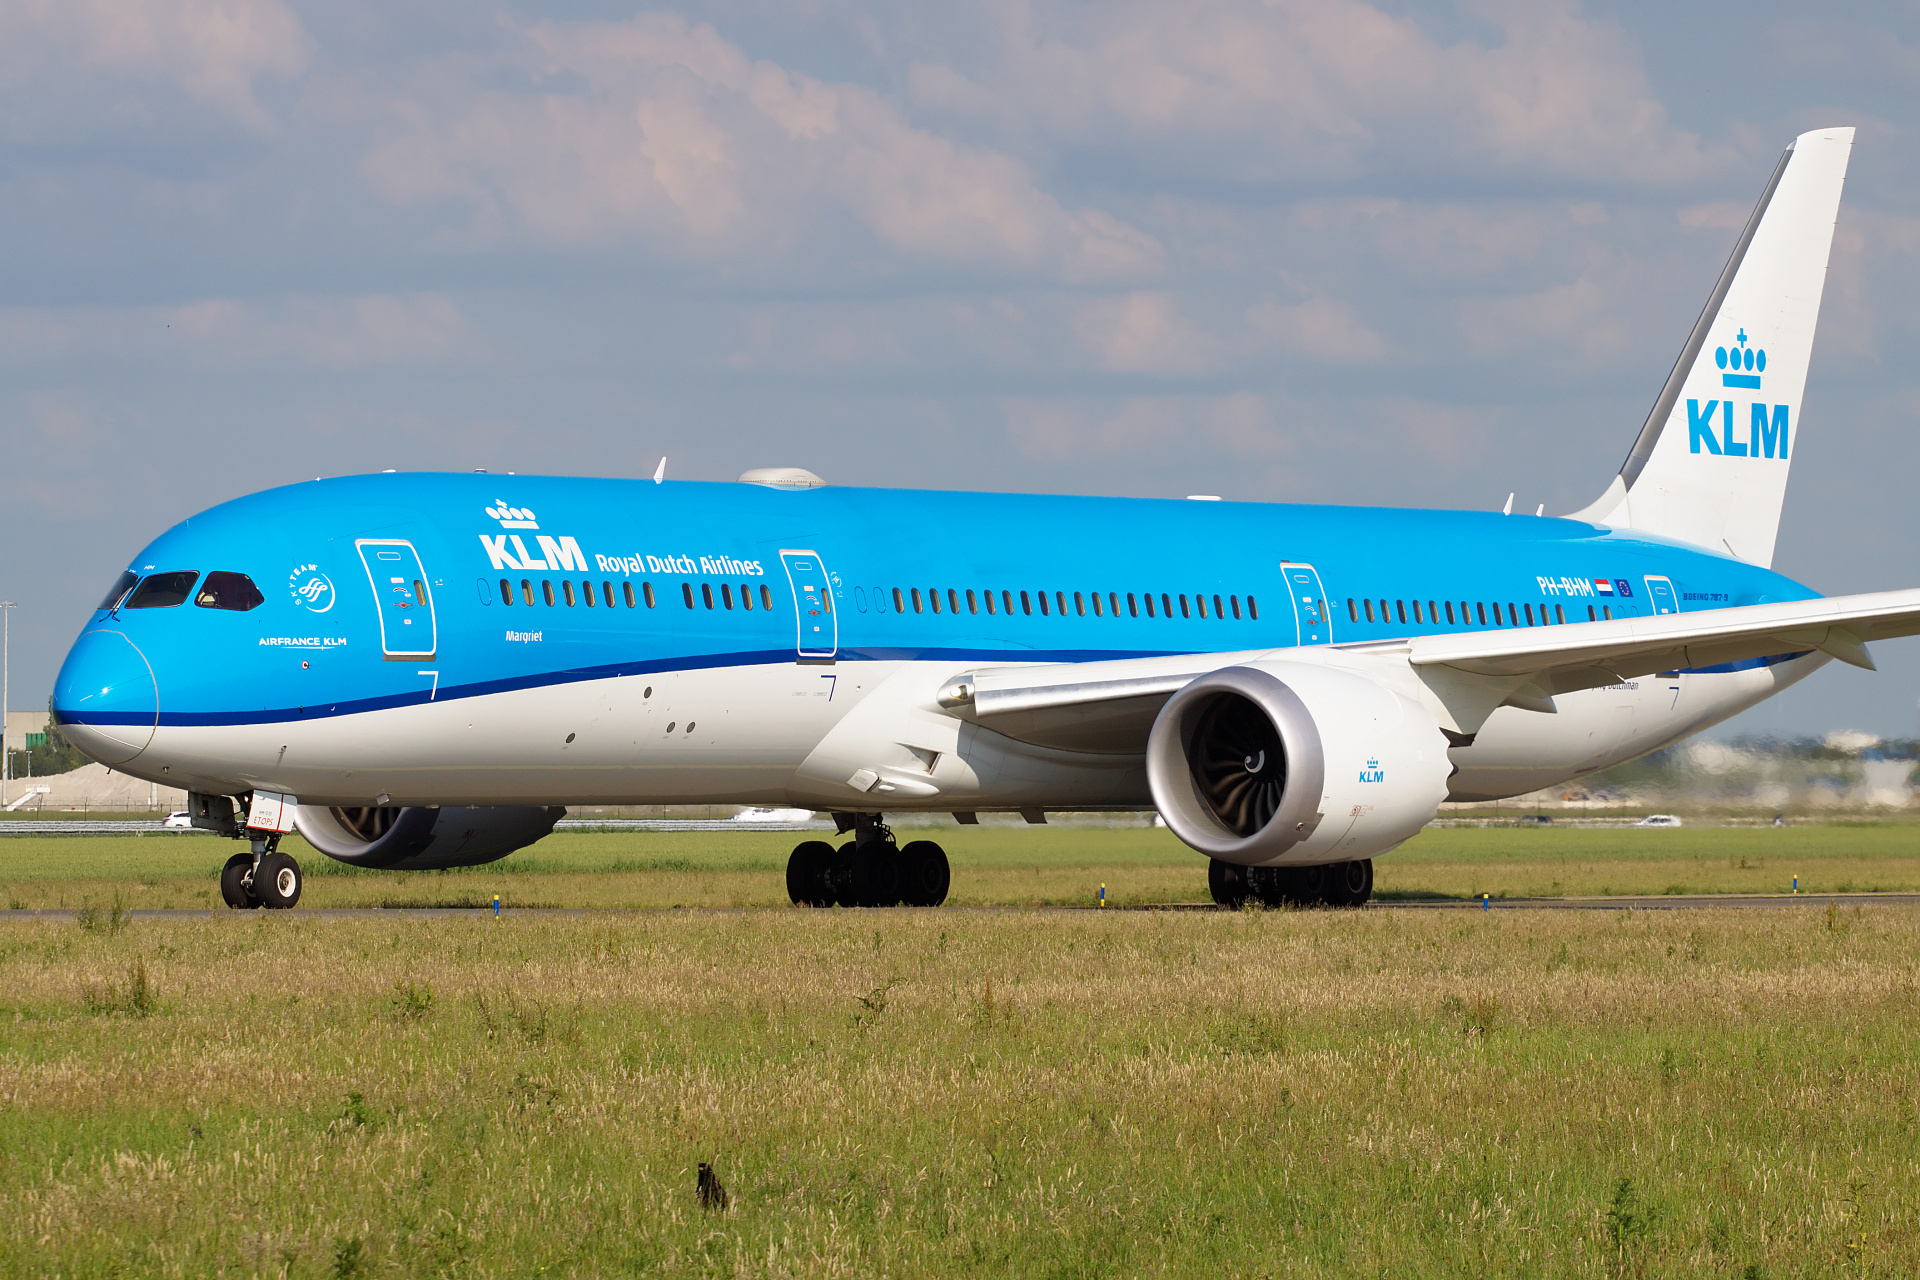 PH-BHM (Aircraft » Schiphol Spotting » Boeing 787-9 Dreamliner » KLM Royal Dutch Airlines)